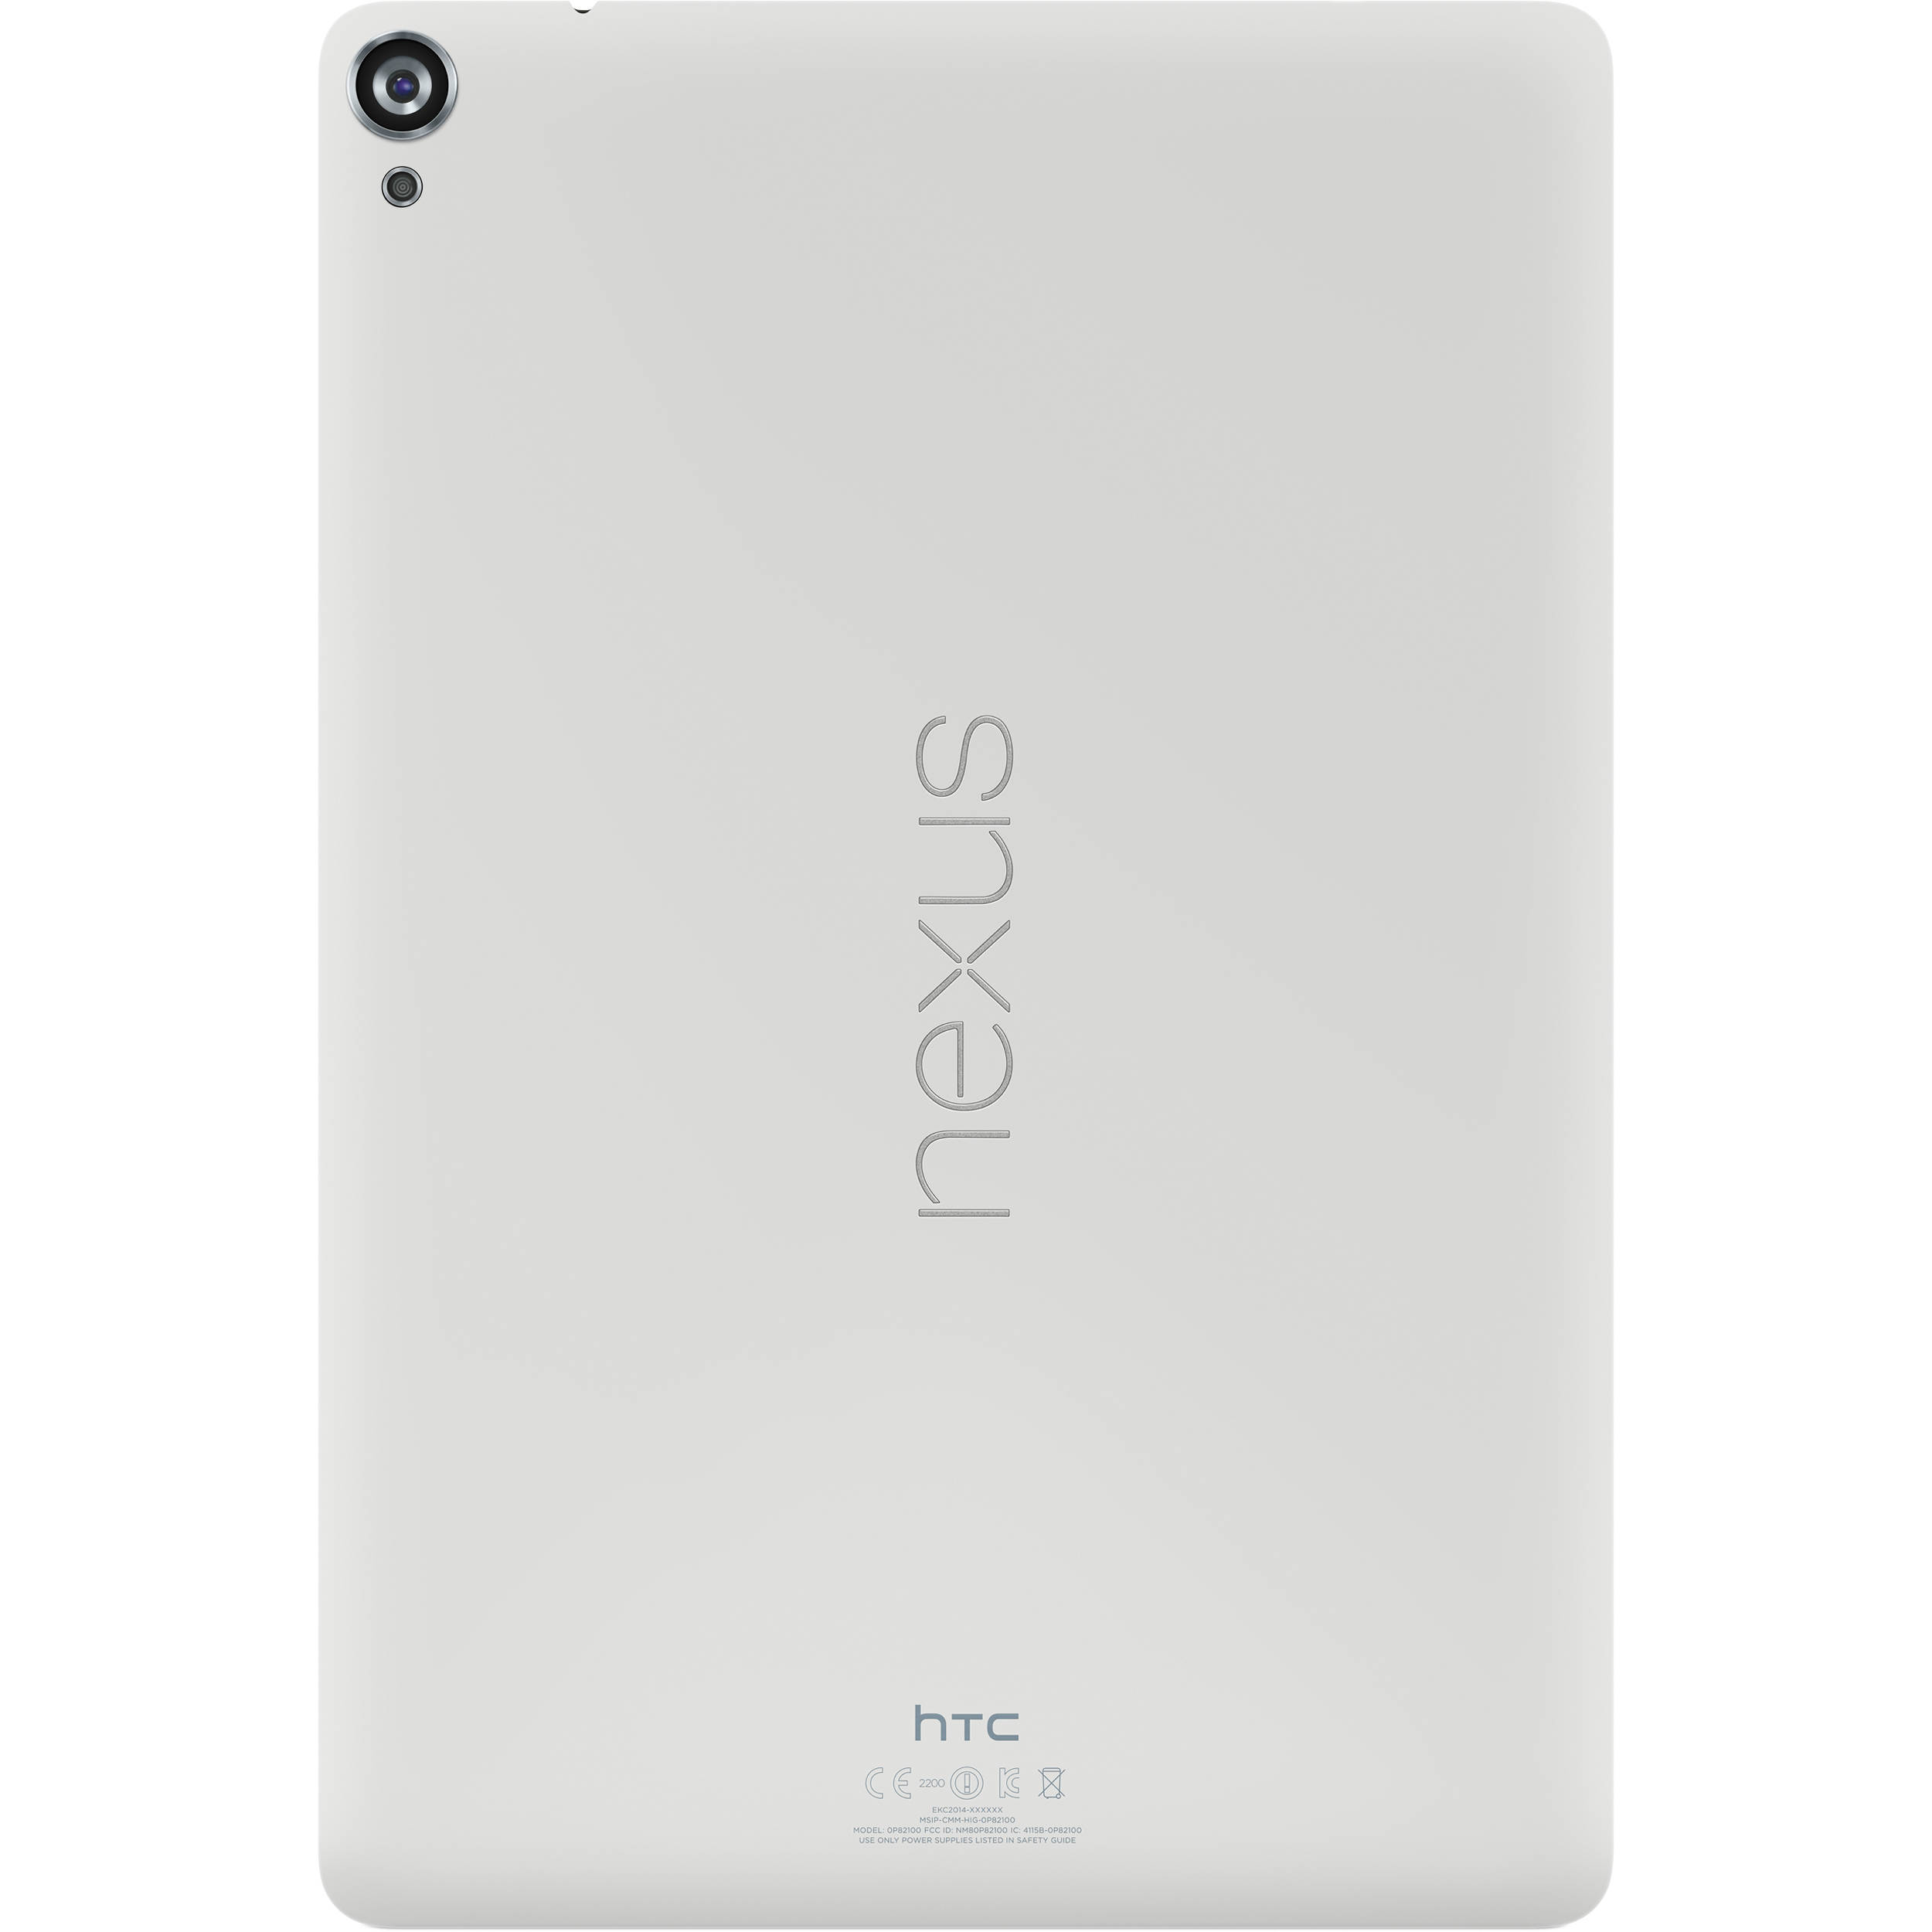 Htc 32gb Google Nexus 9 Tablet 99hzf002 00 B H Photo Video